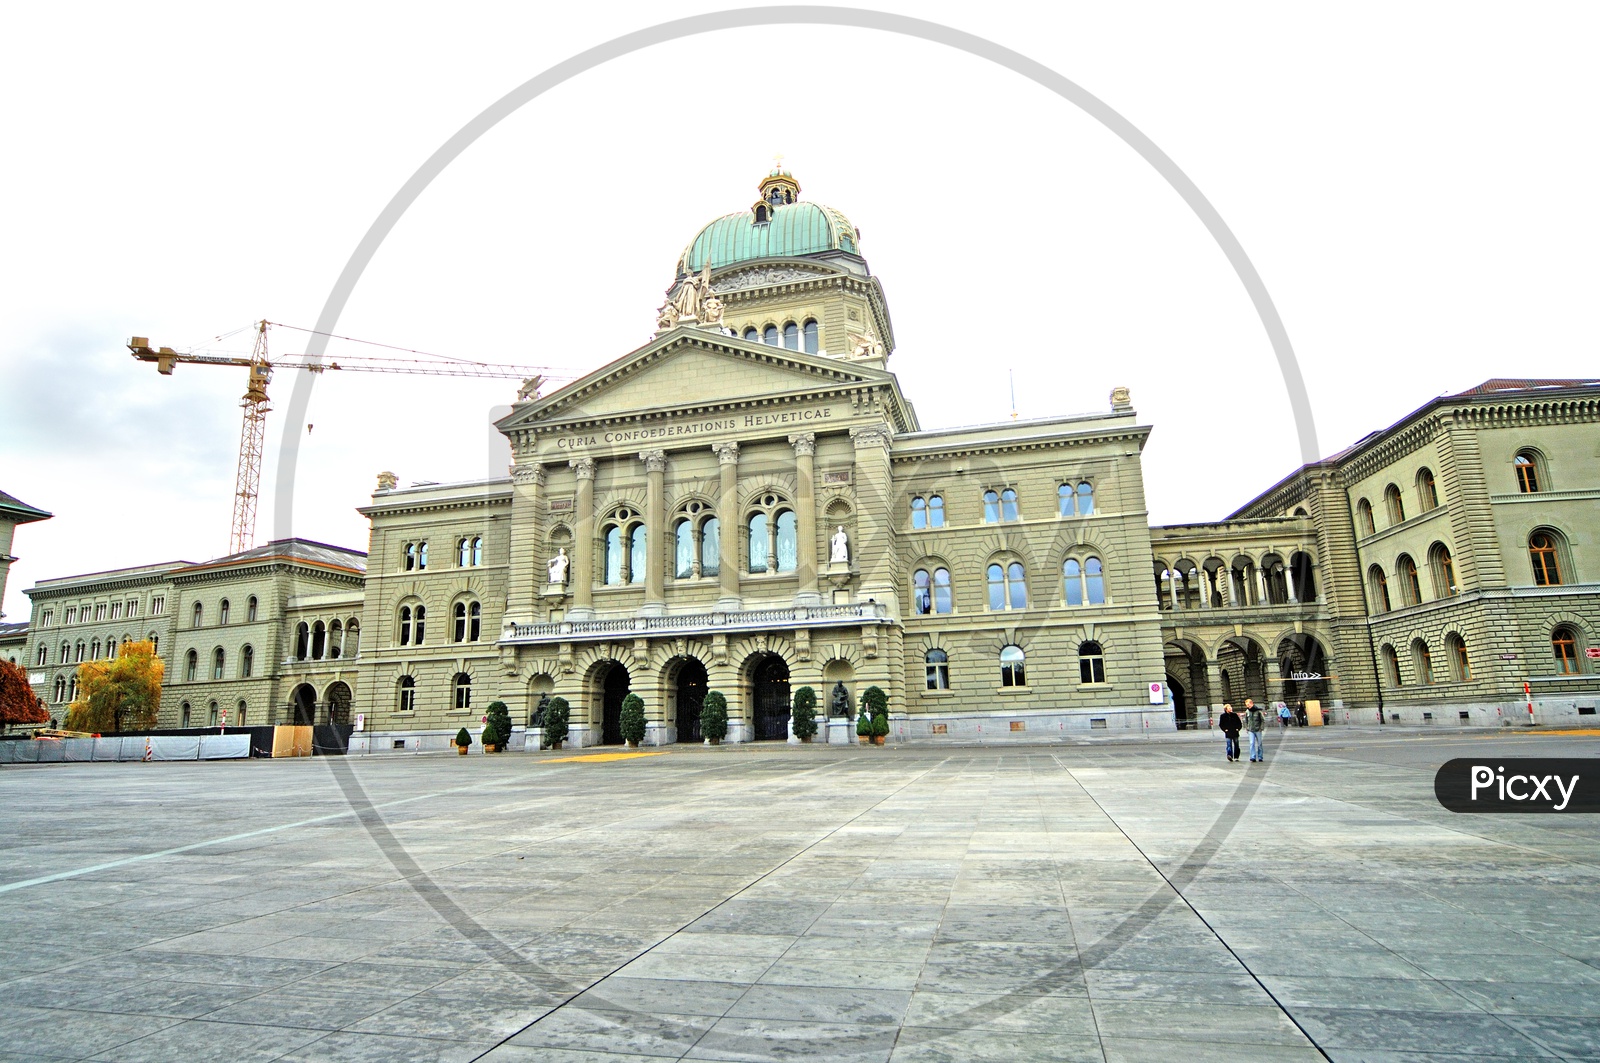 The Parliament Building Of Switzerland